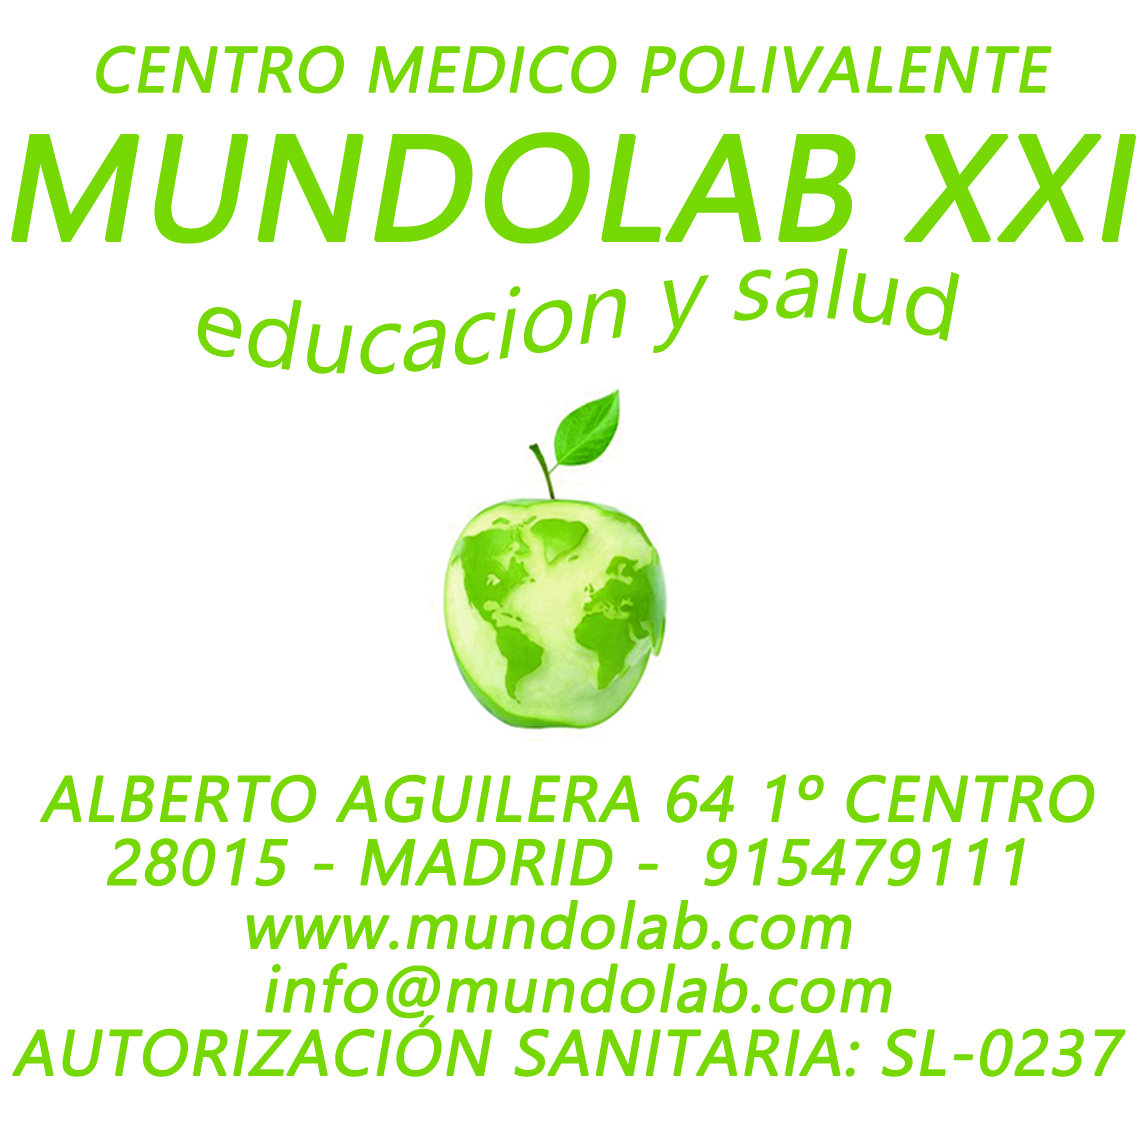 Gabinete Medico Mundolab Xxi. Enfermeros en Madrid